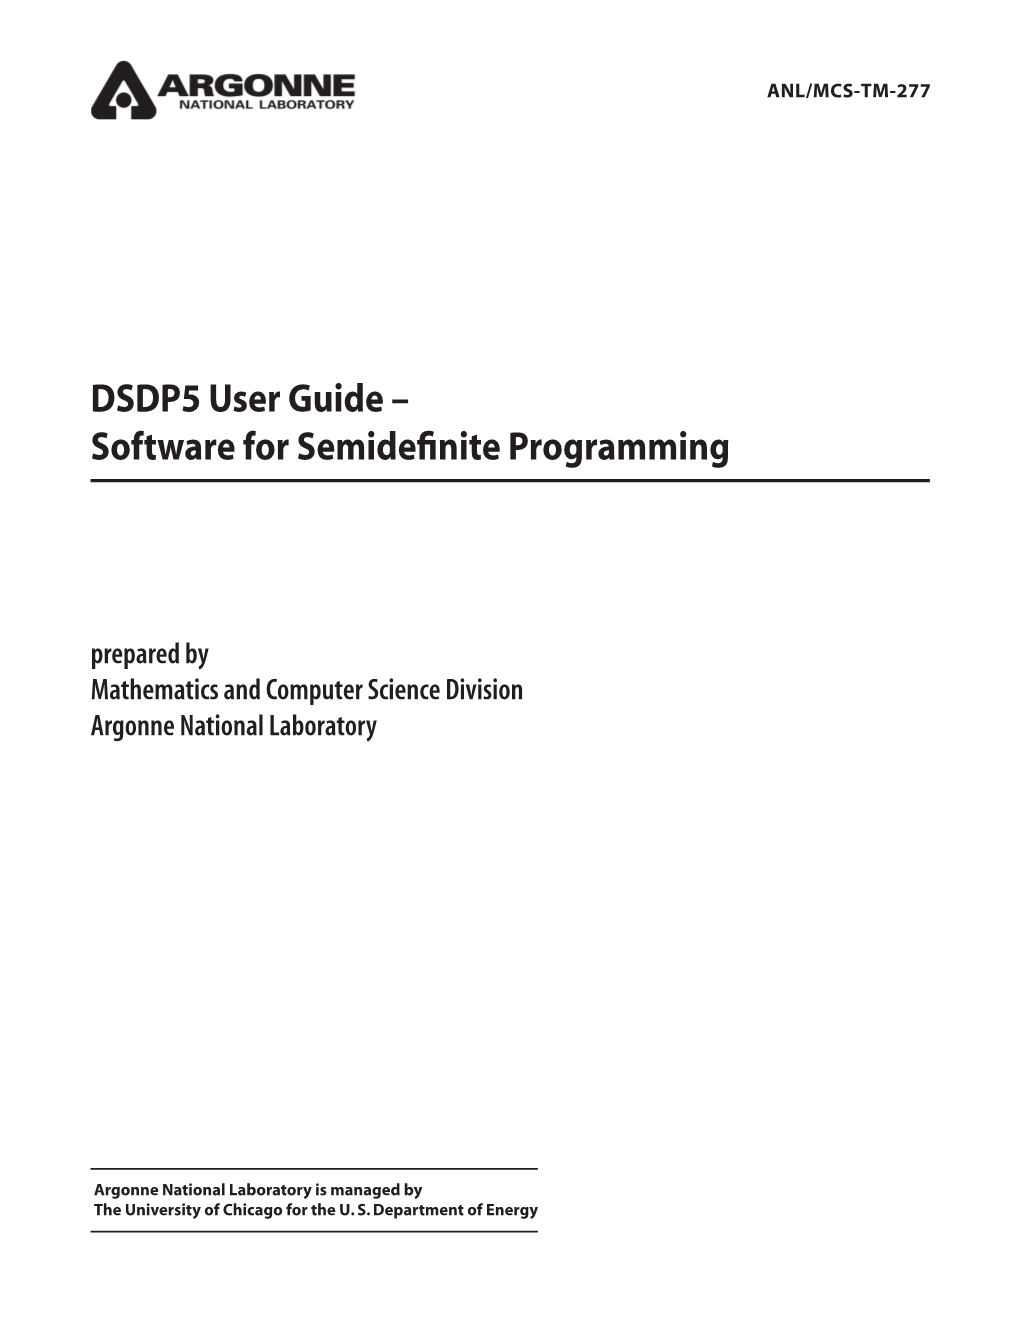 Software for Semidefinite Programming